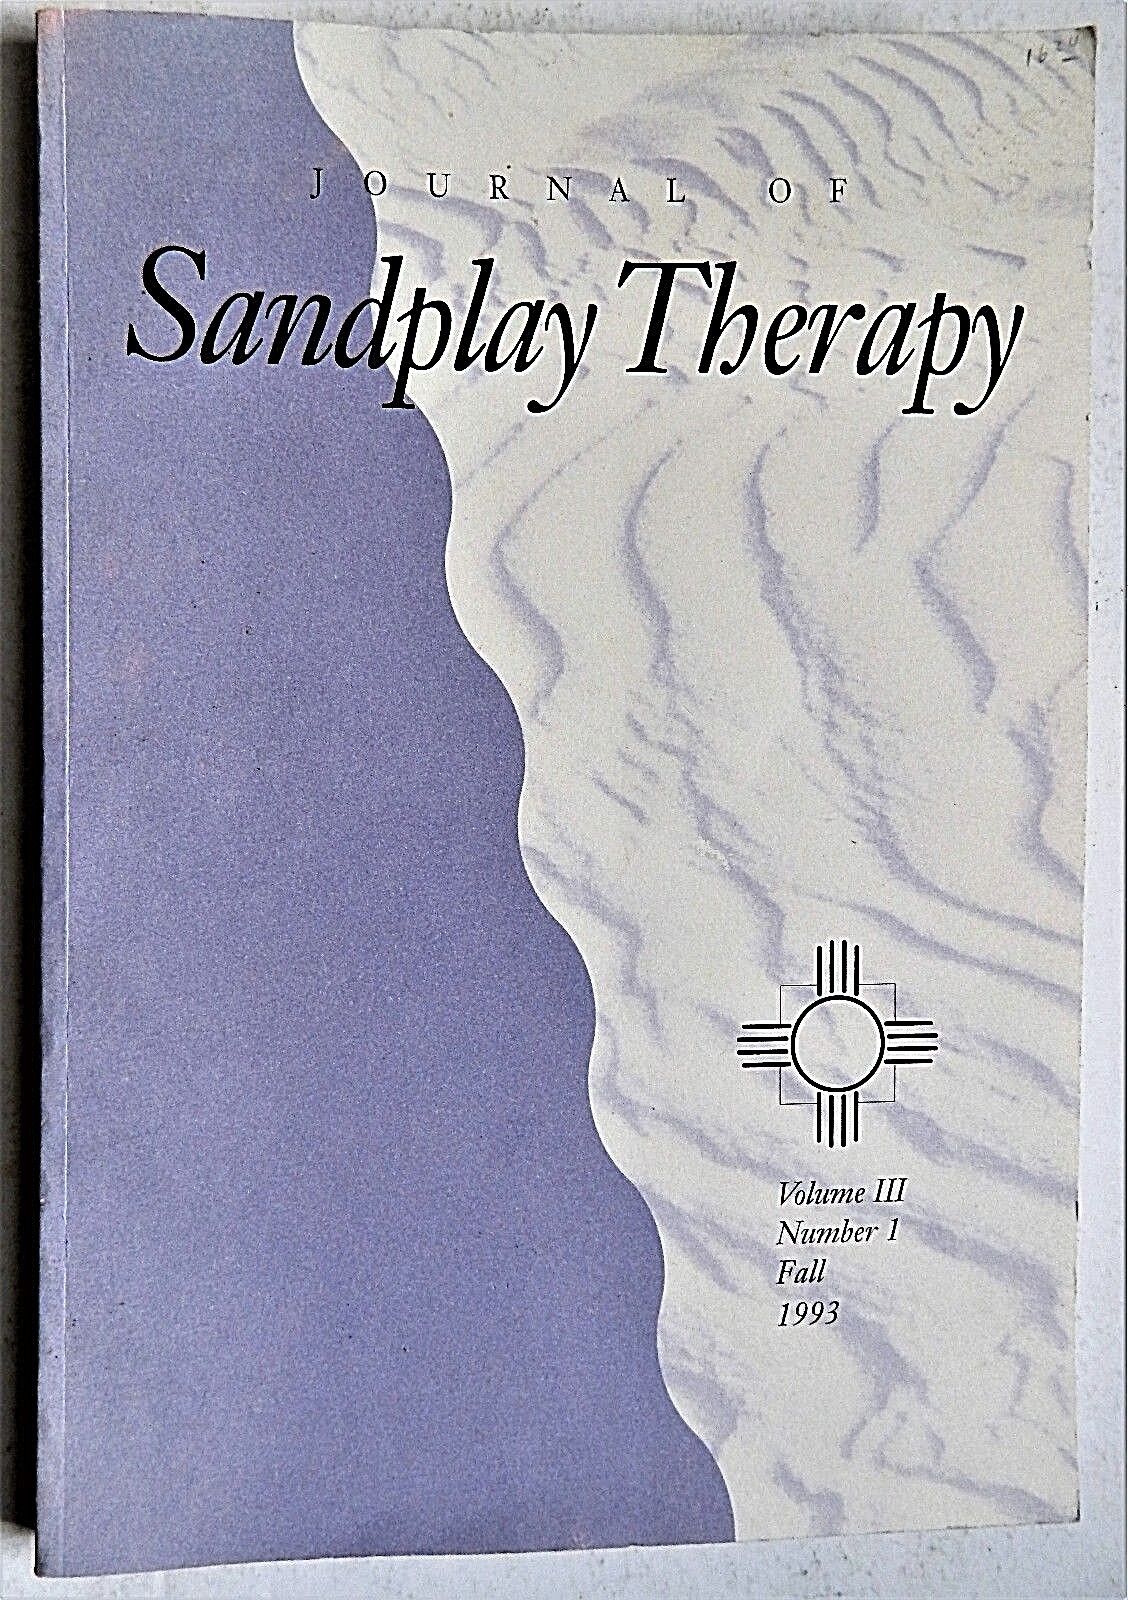 Journal of Sandplay Therapy V3 #1 1993 psychotherapy psychology counseling sand